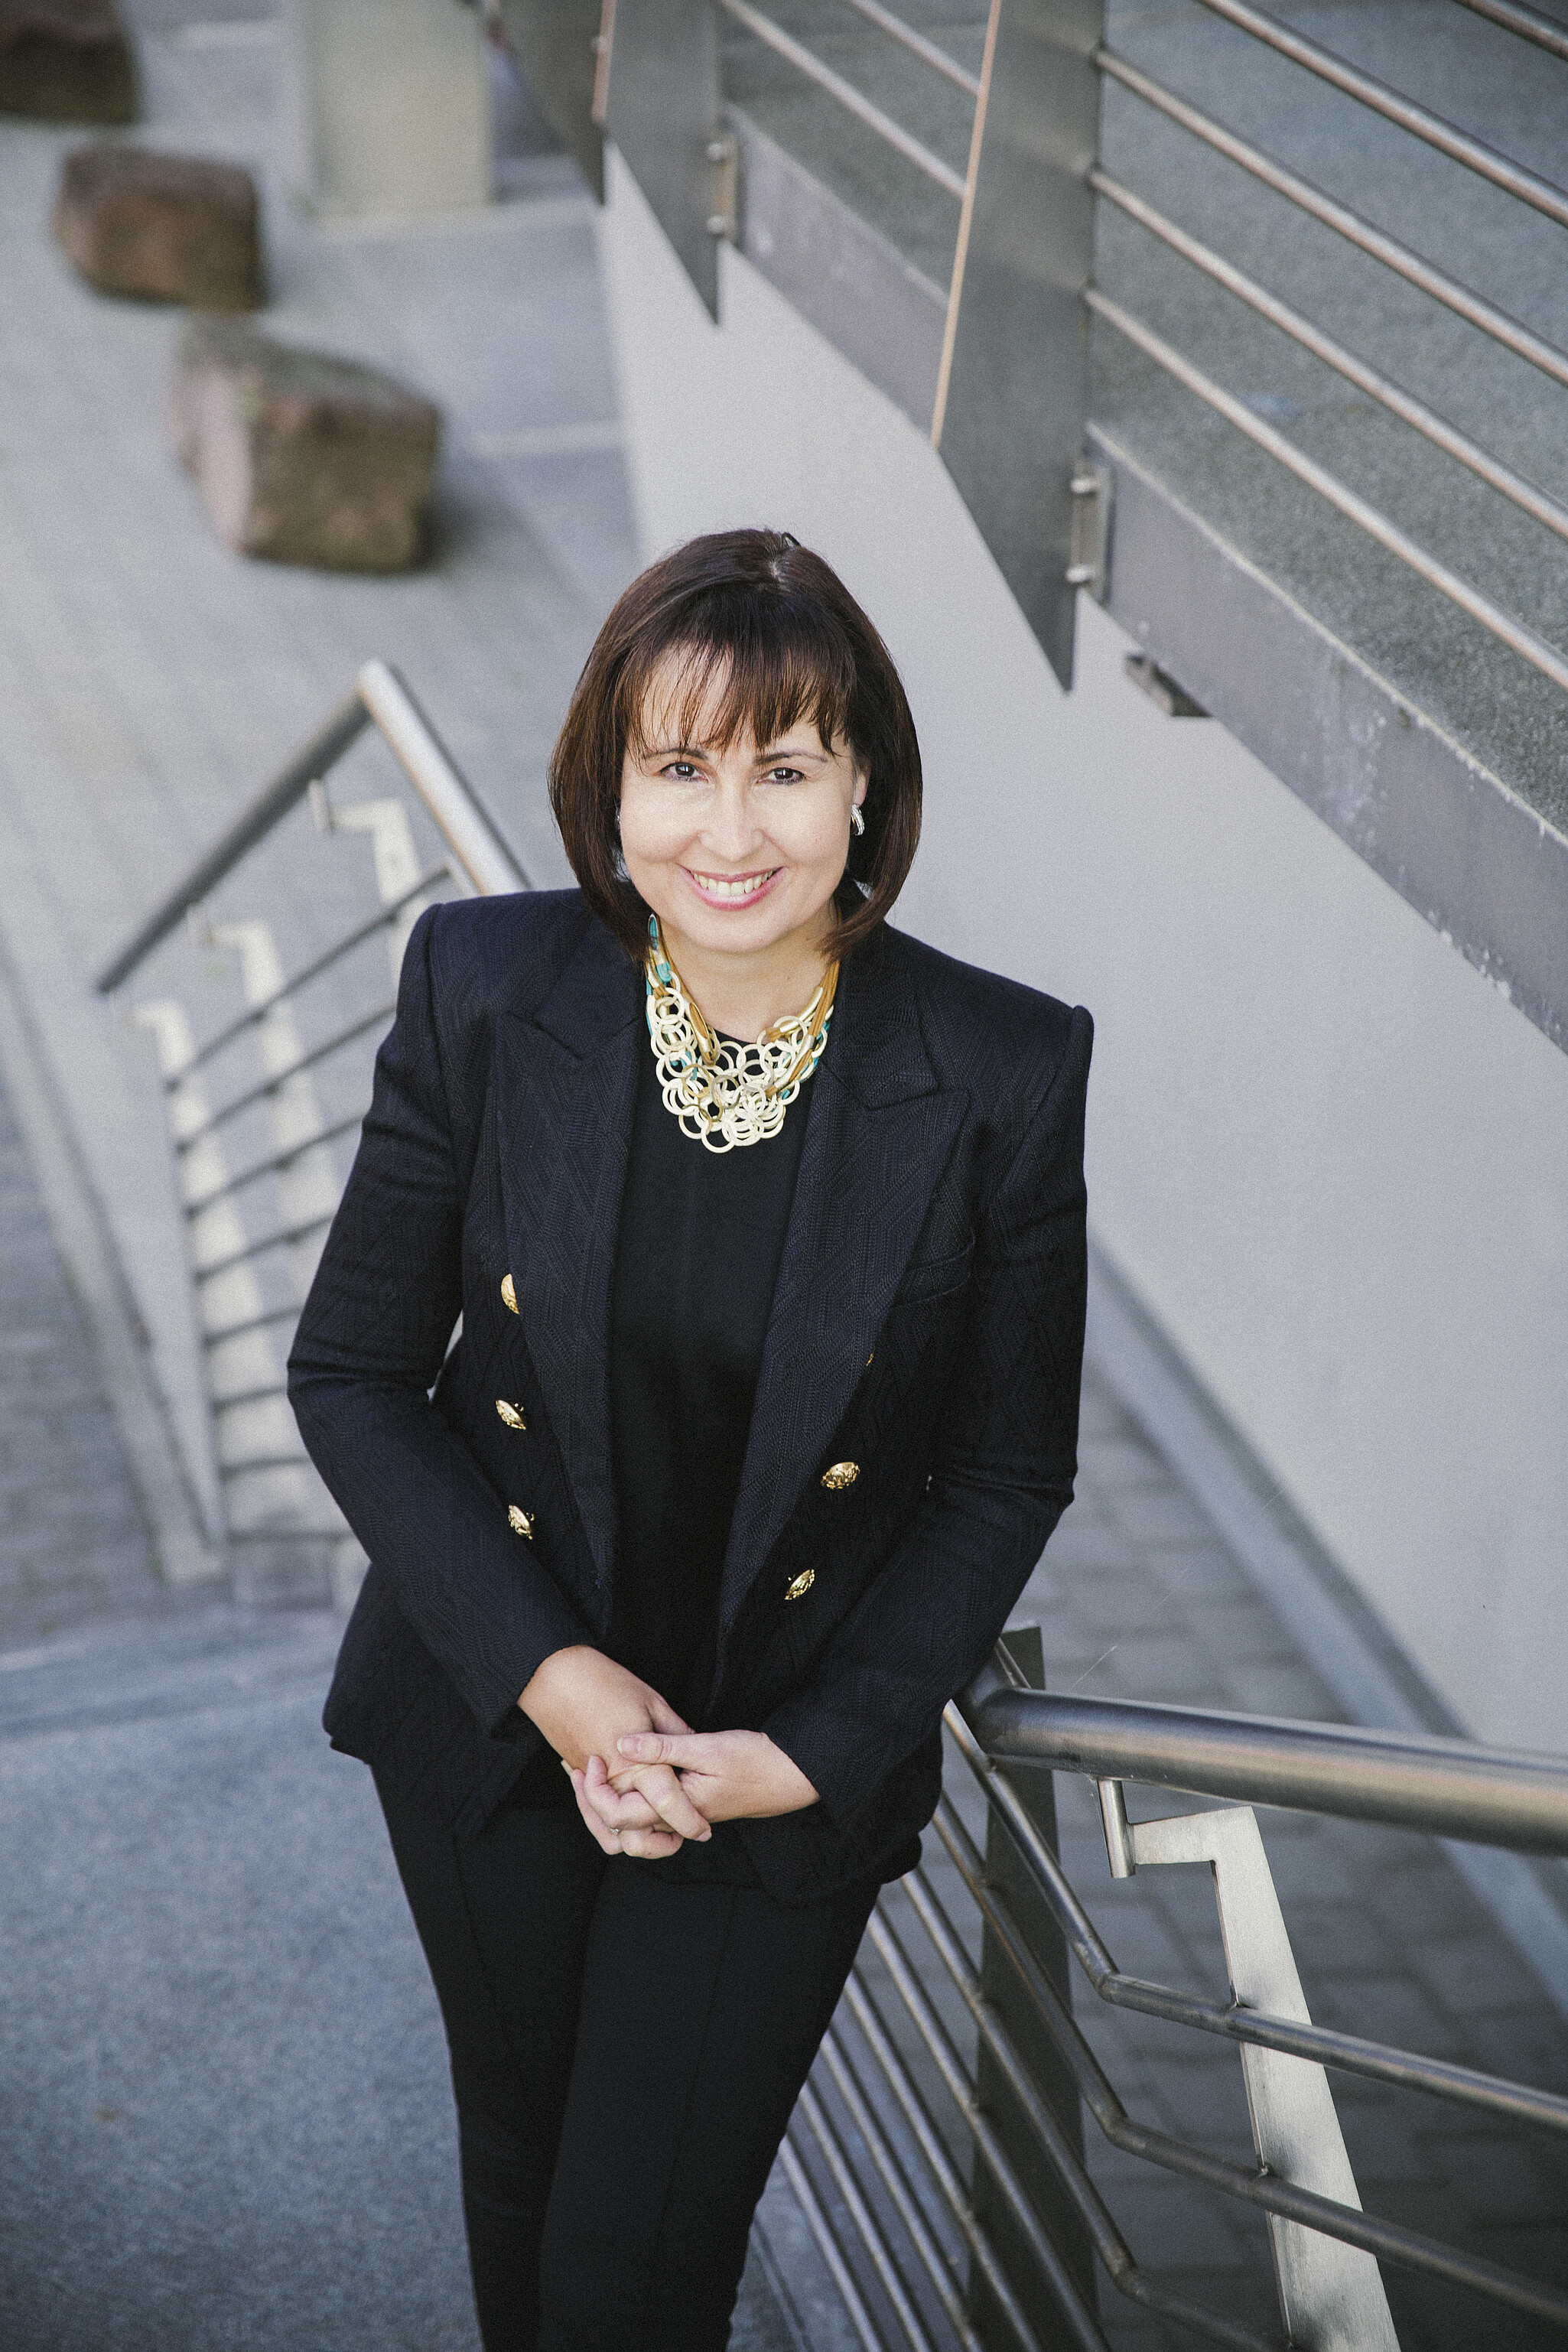 Haufe Verlag's Personalmagazin magazine has named IBE Director Prof. Dr. Jutta Rump one of the "40 Leading HR Minds".